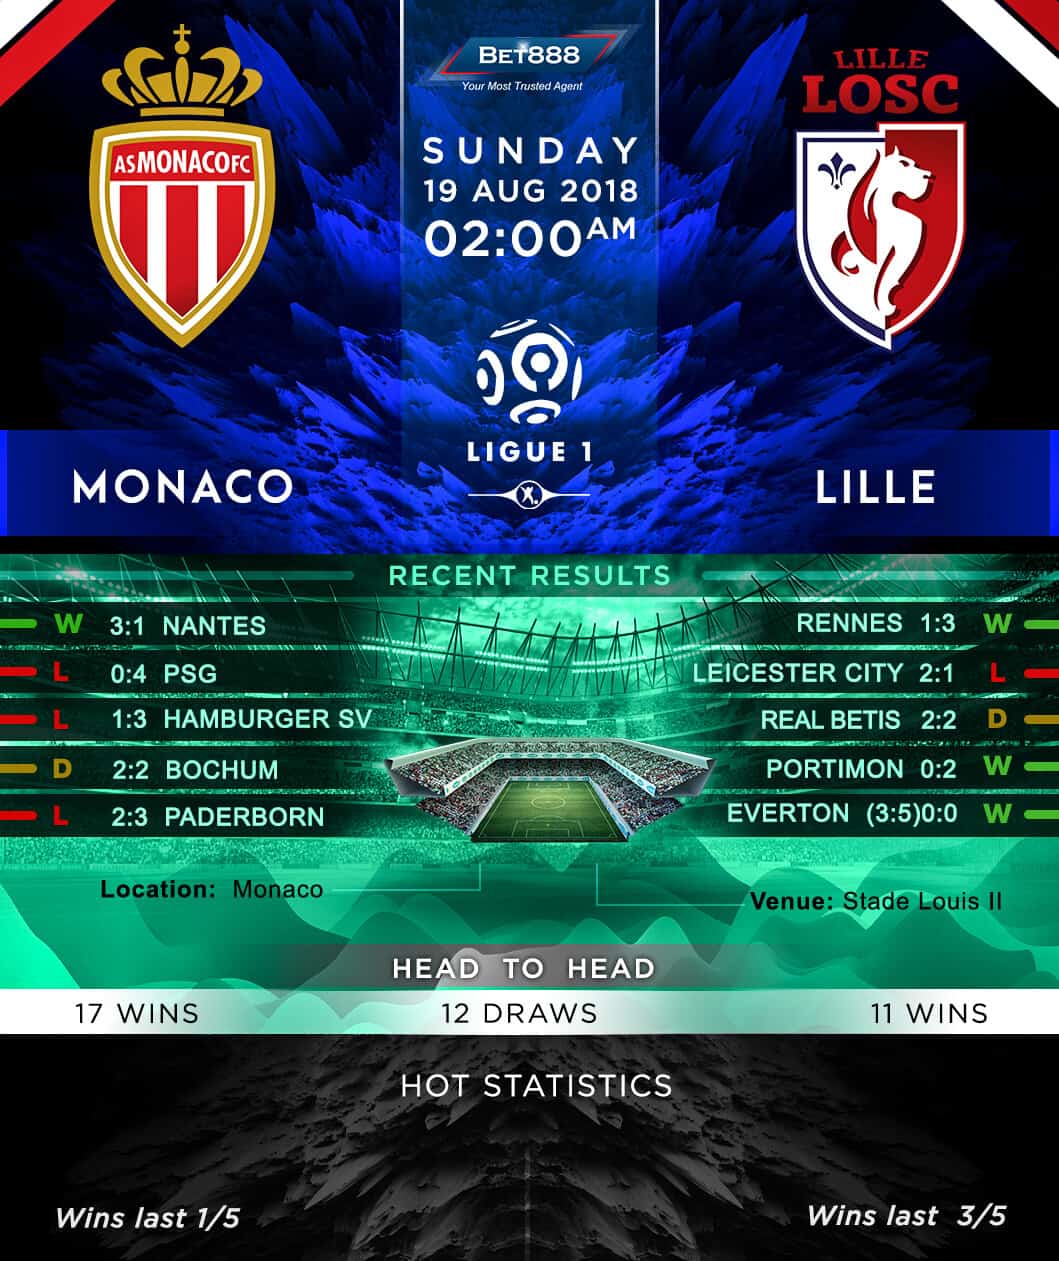 AS Monaco vs Lille OSC 19/08/18